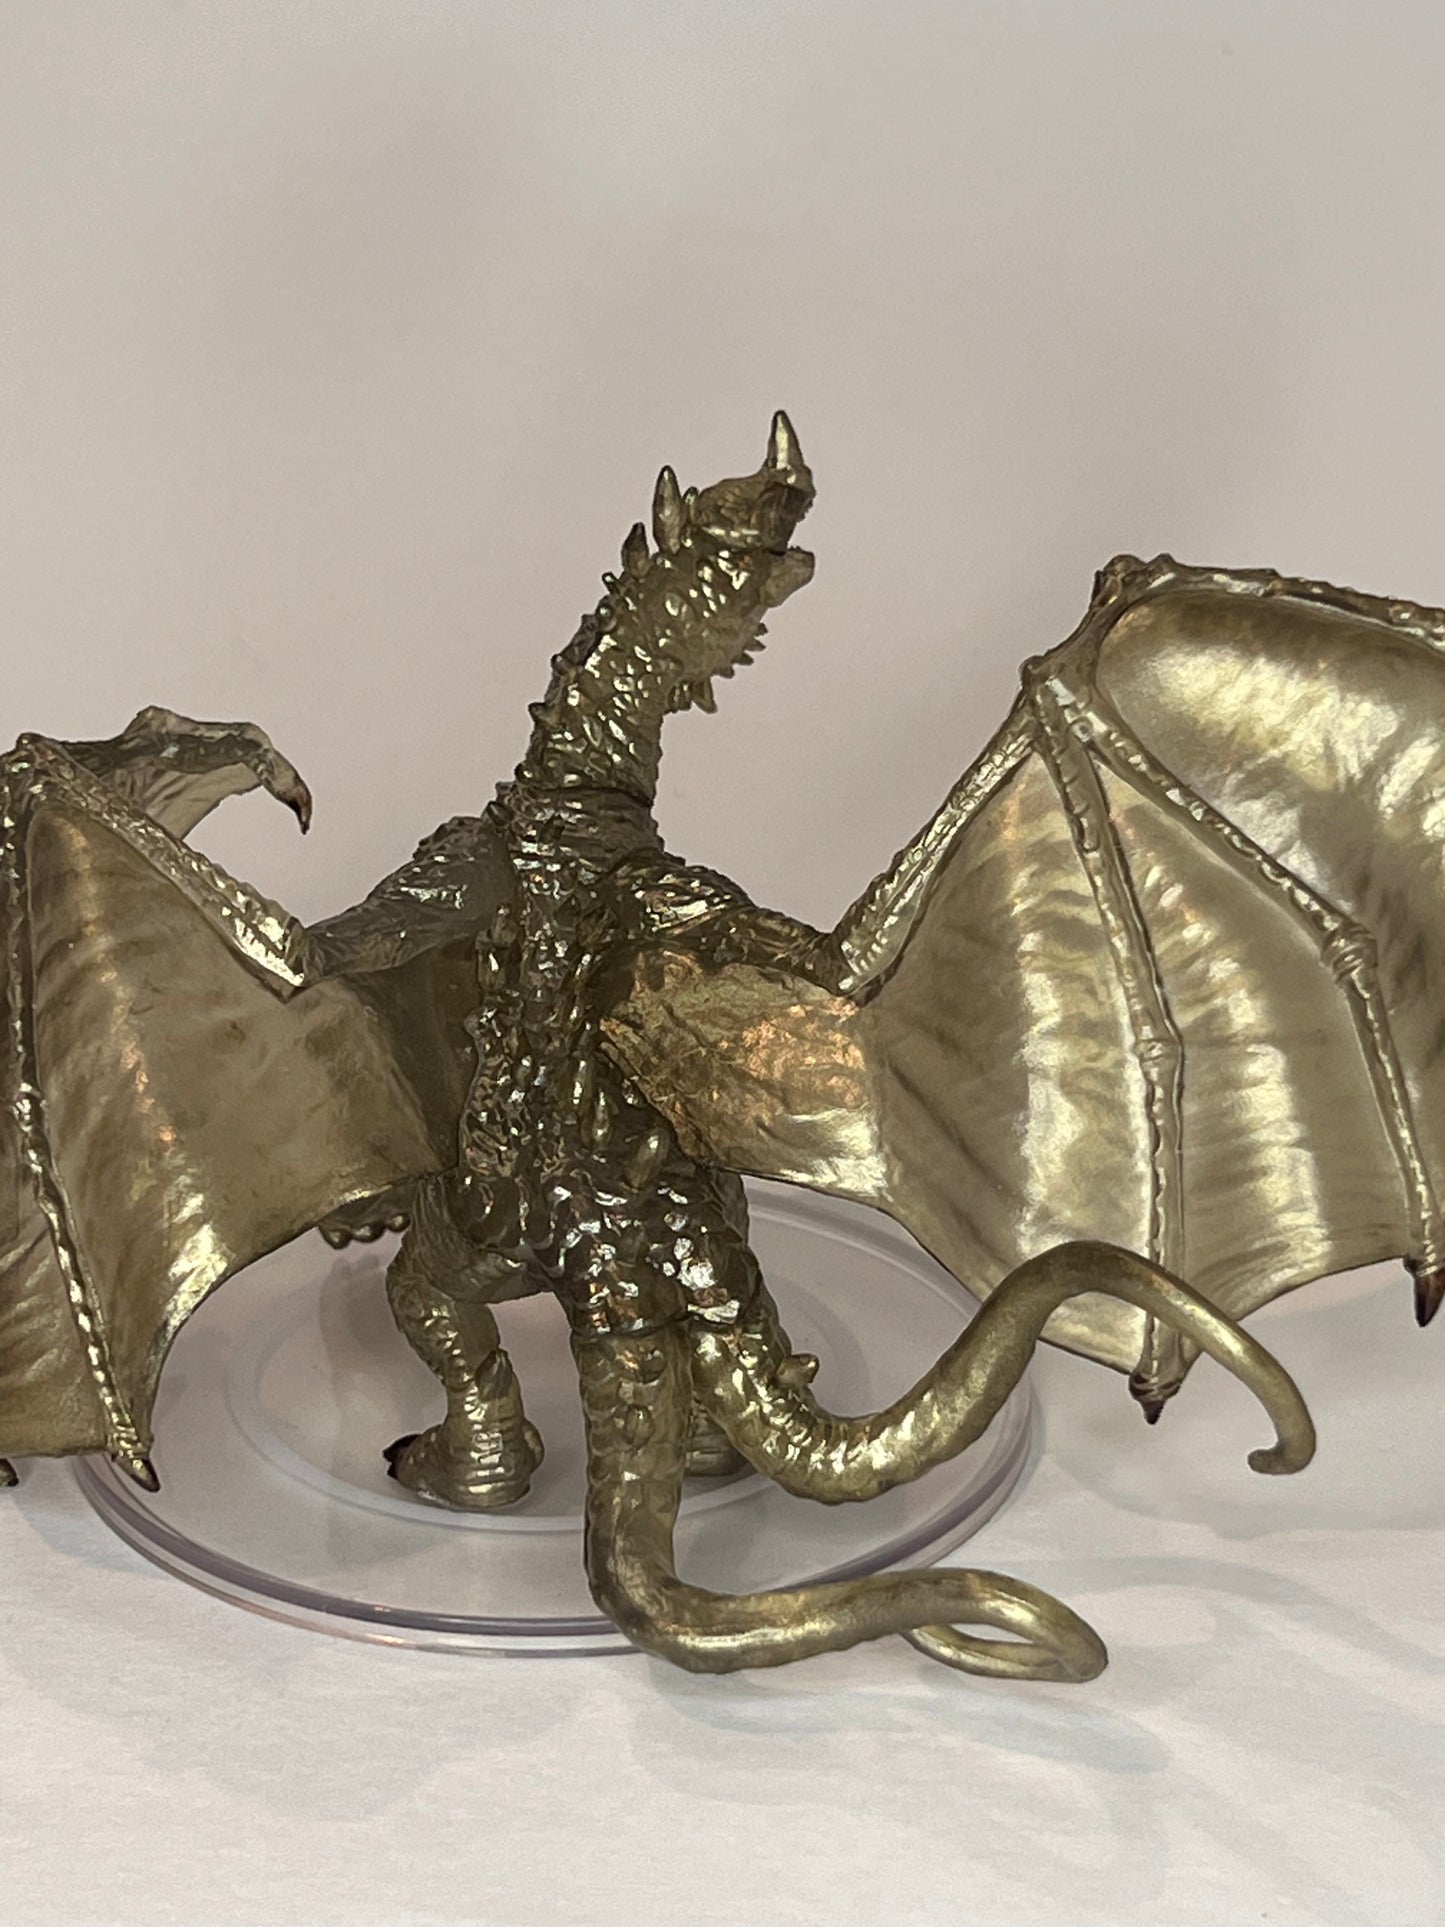 Young Crystal Dragon - Fizban's Treasury of Dragons 27/46